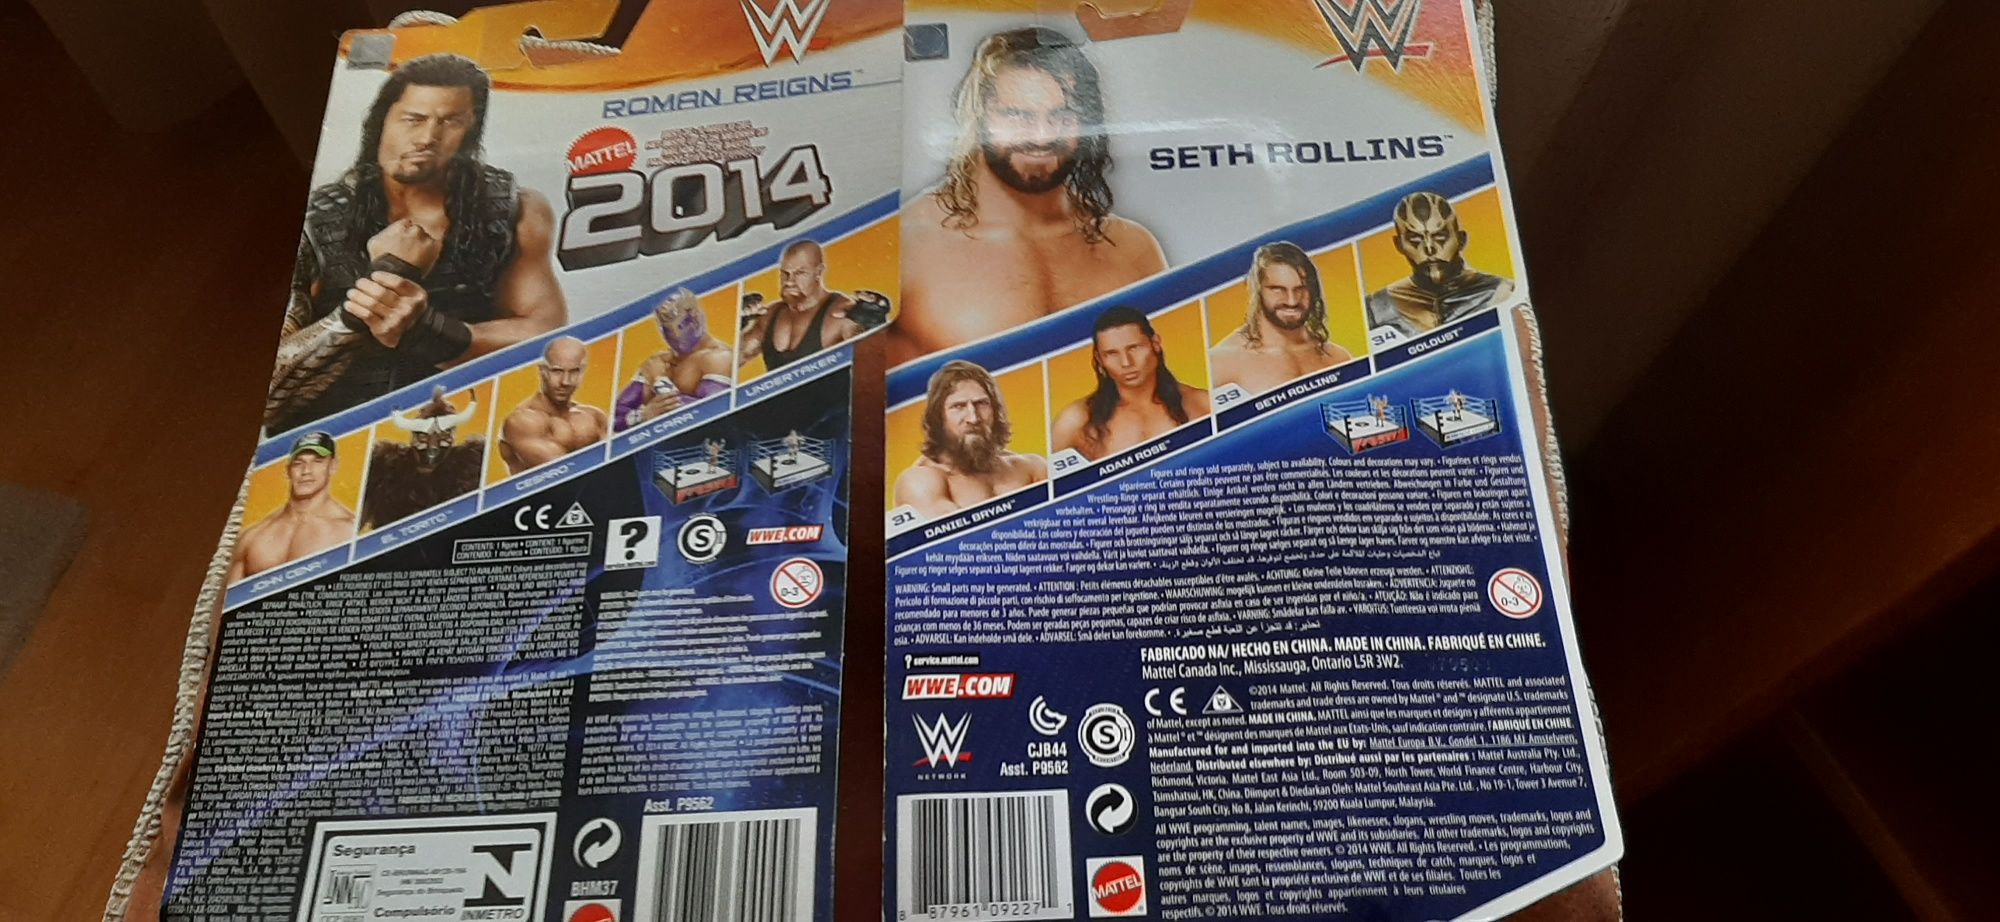 2 figuras campeões wwe wrestling-Seth Rollins/Roman Reigns